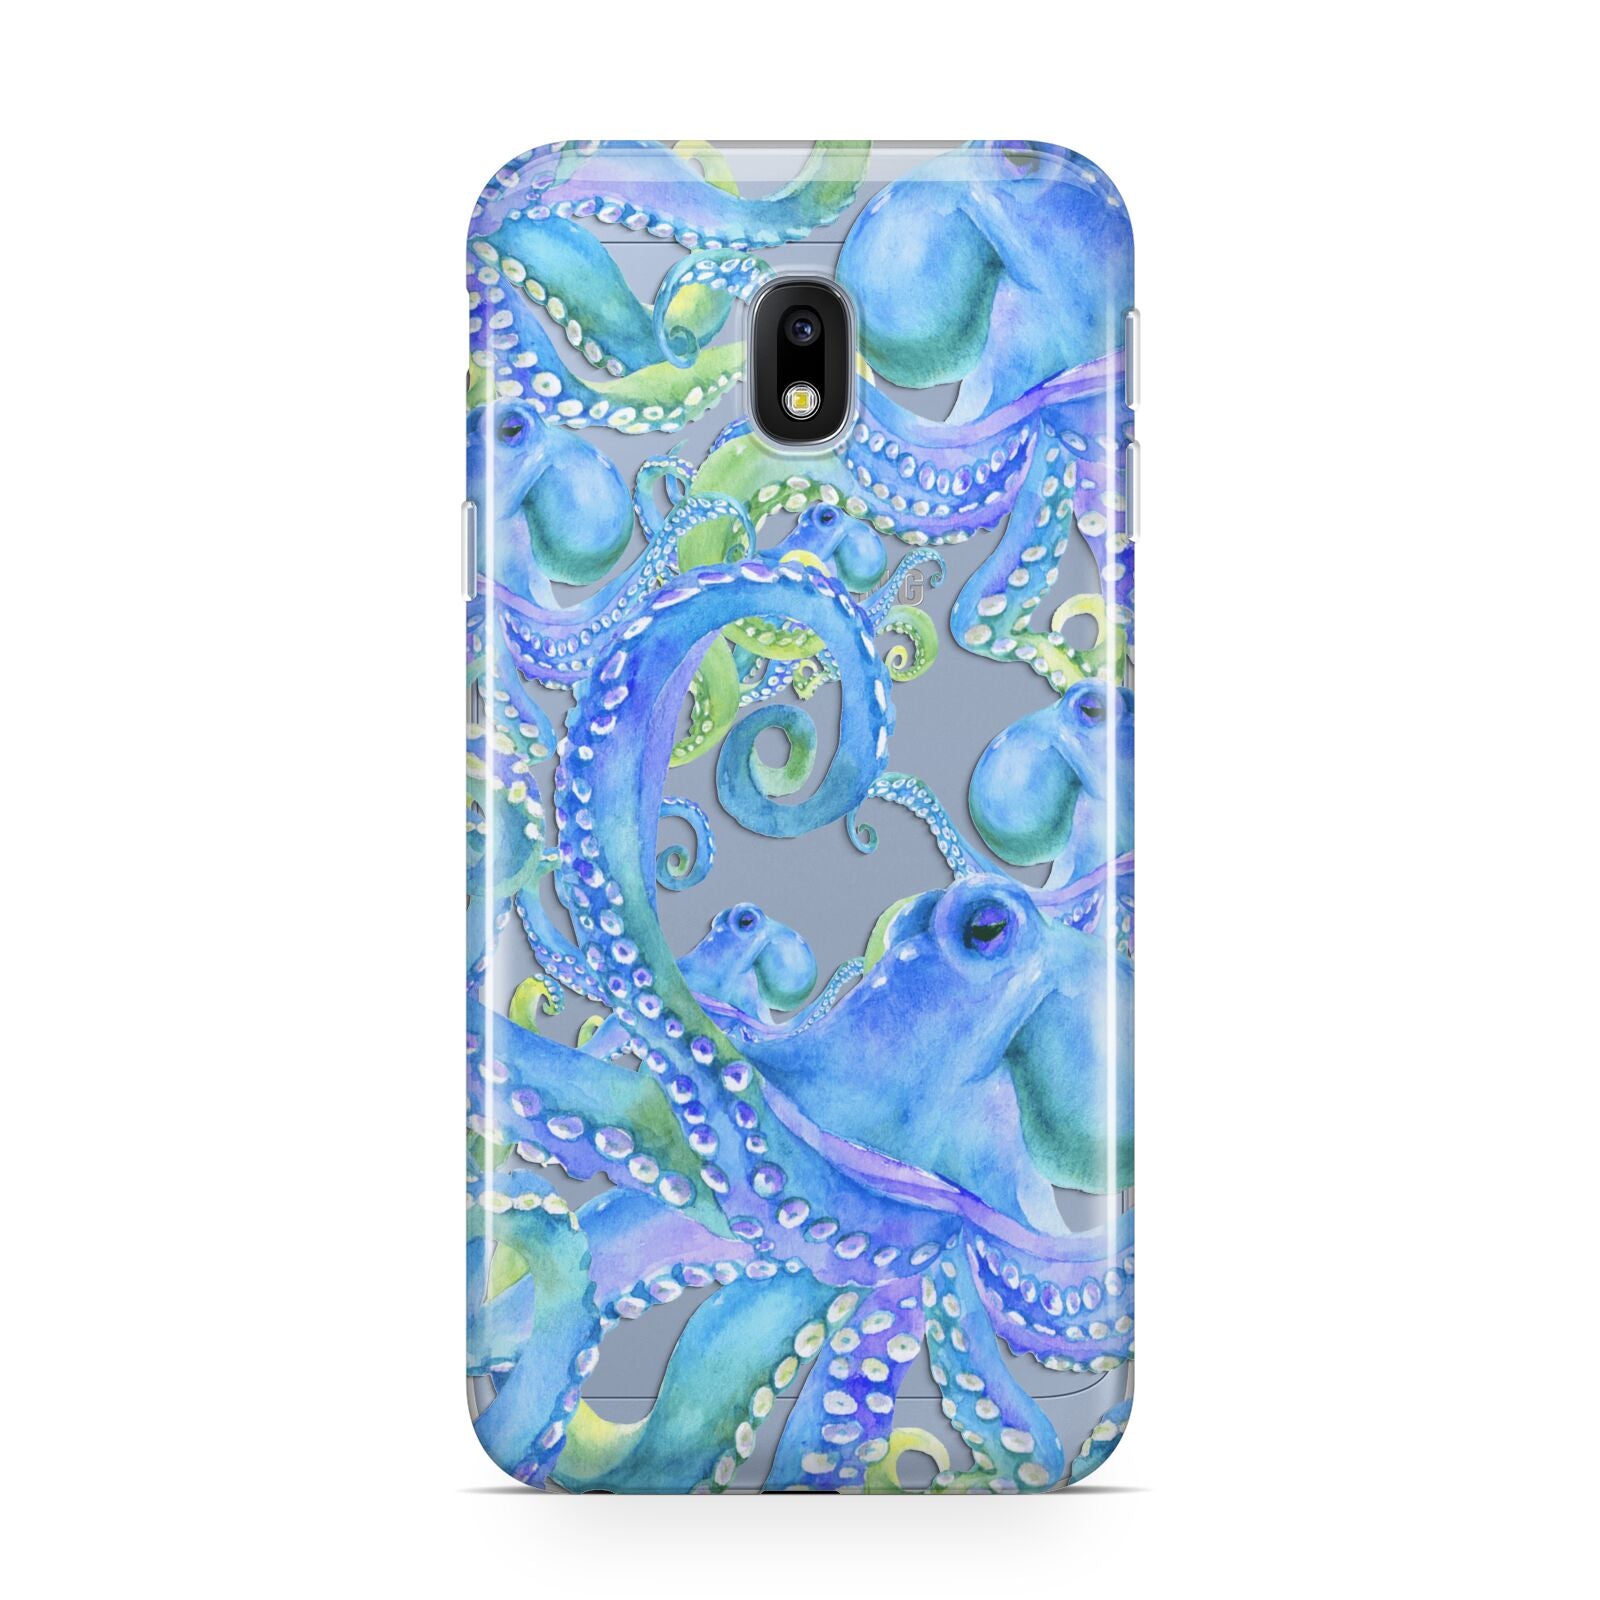 Octopus Samsung Galaxy J3 2017 Case